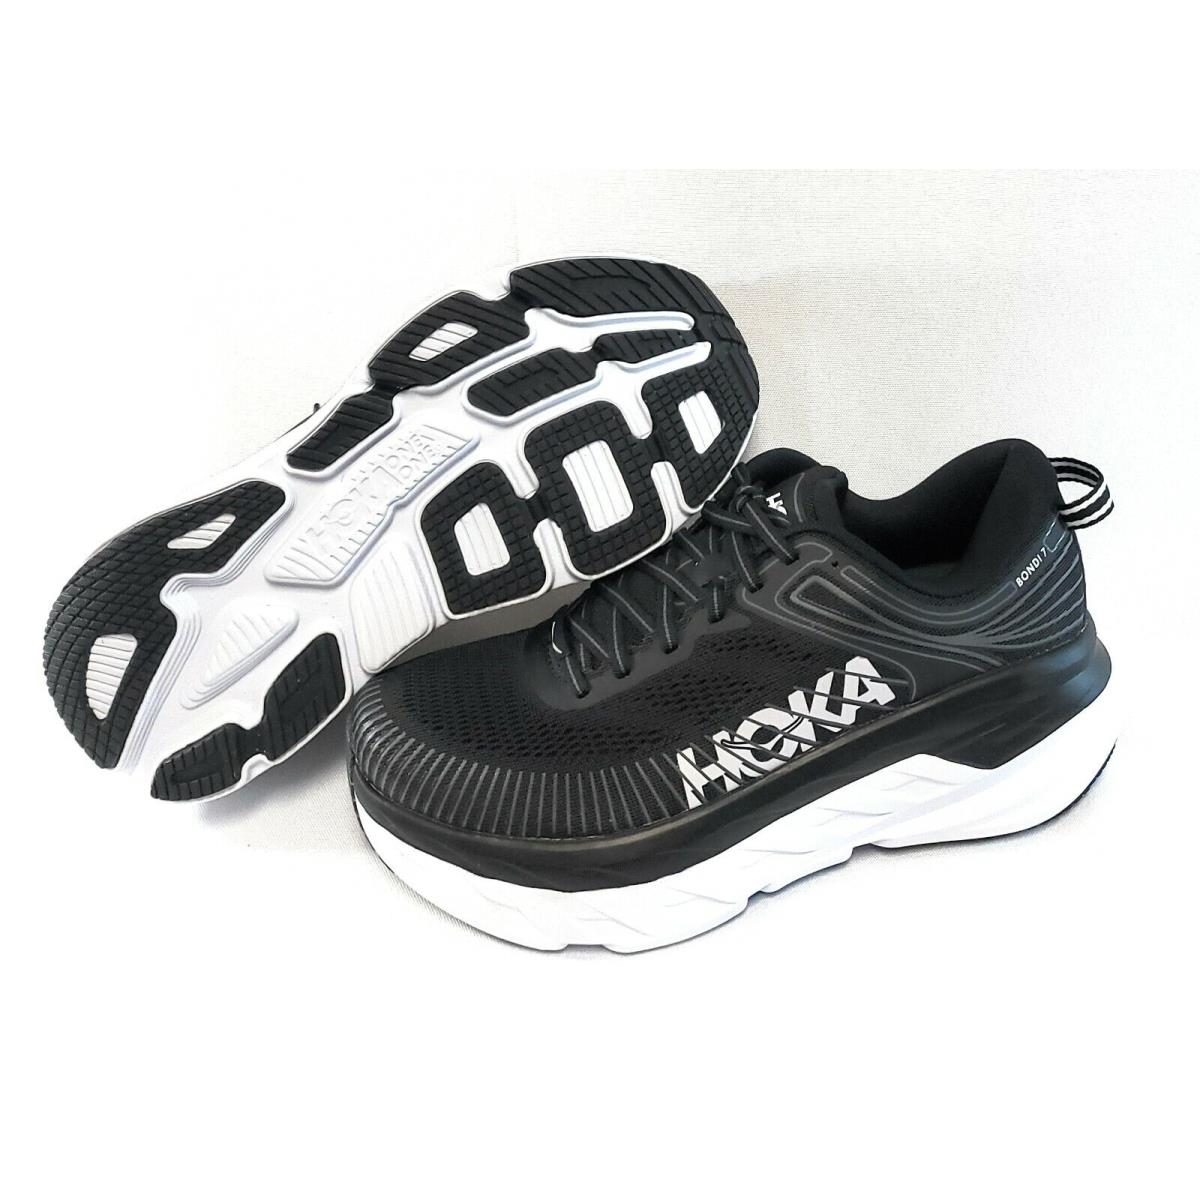 Womens Hoka One One Bondi 7 Wide 1110531 Bwht Black White Running Sneakers Shoes